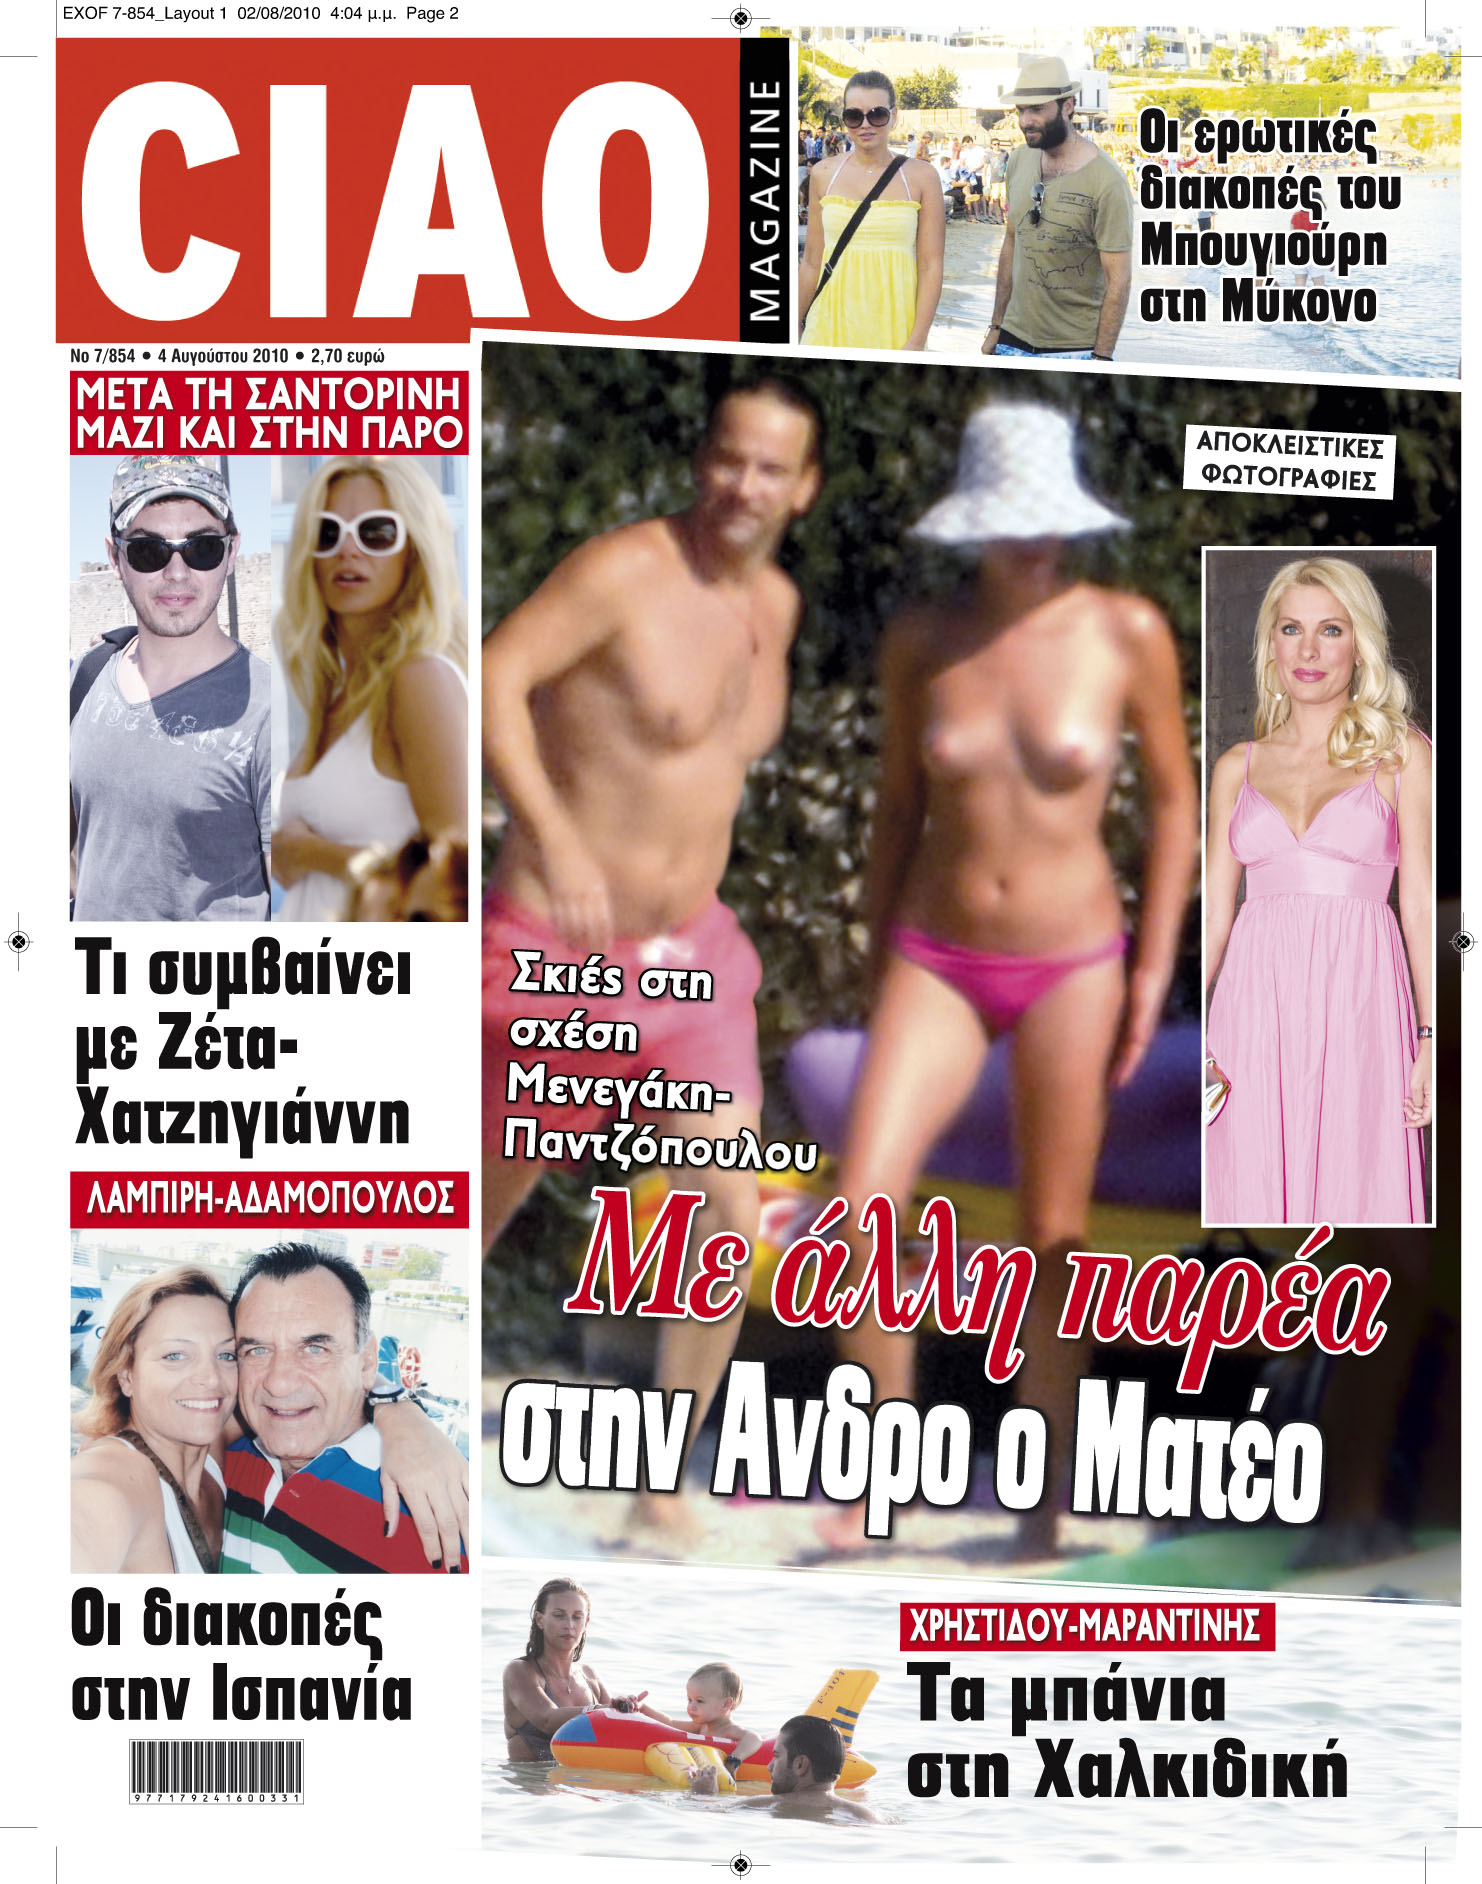 Ciao magazine: Το νέο trend